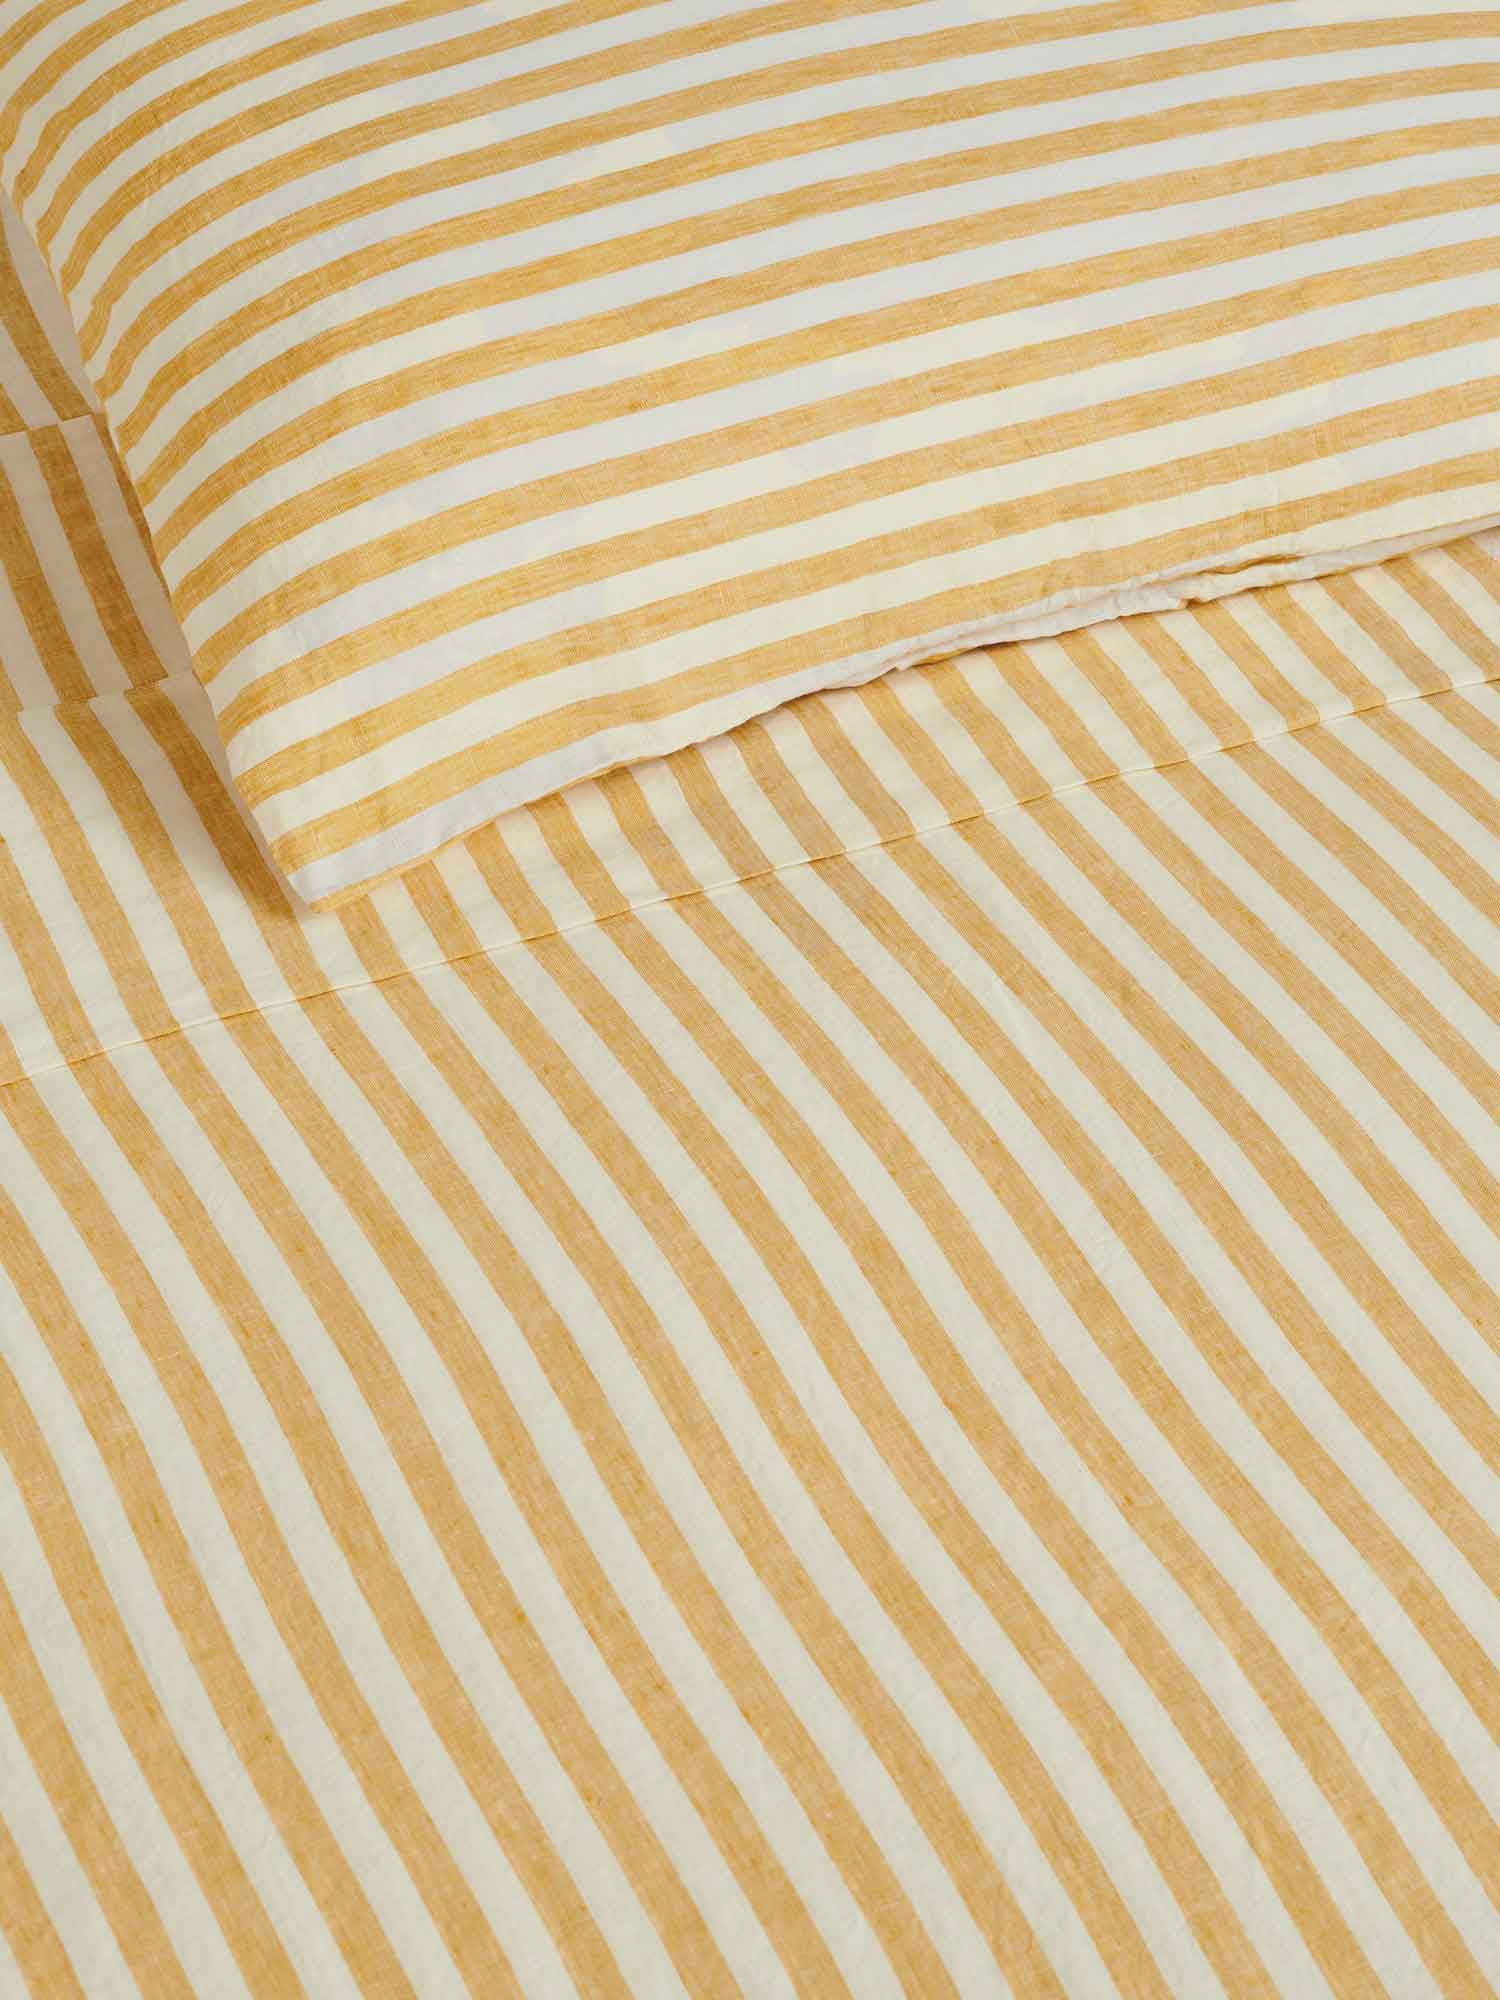 Flat Sheet in Yellow Stripes